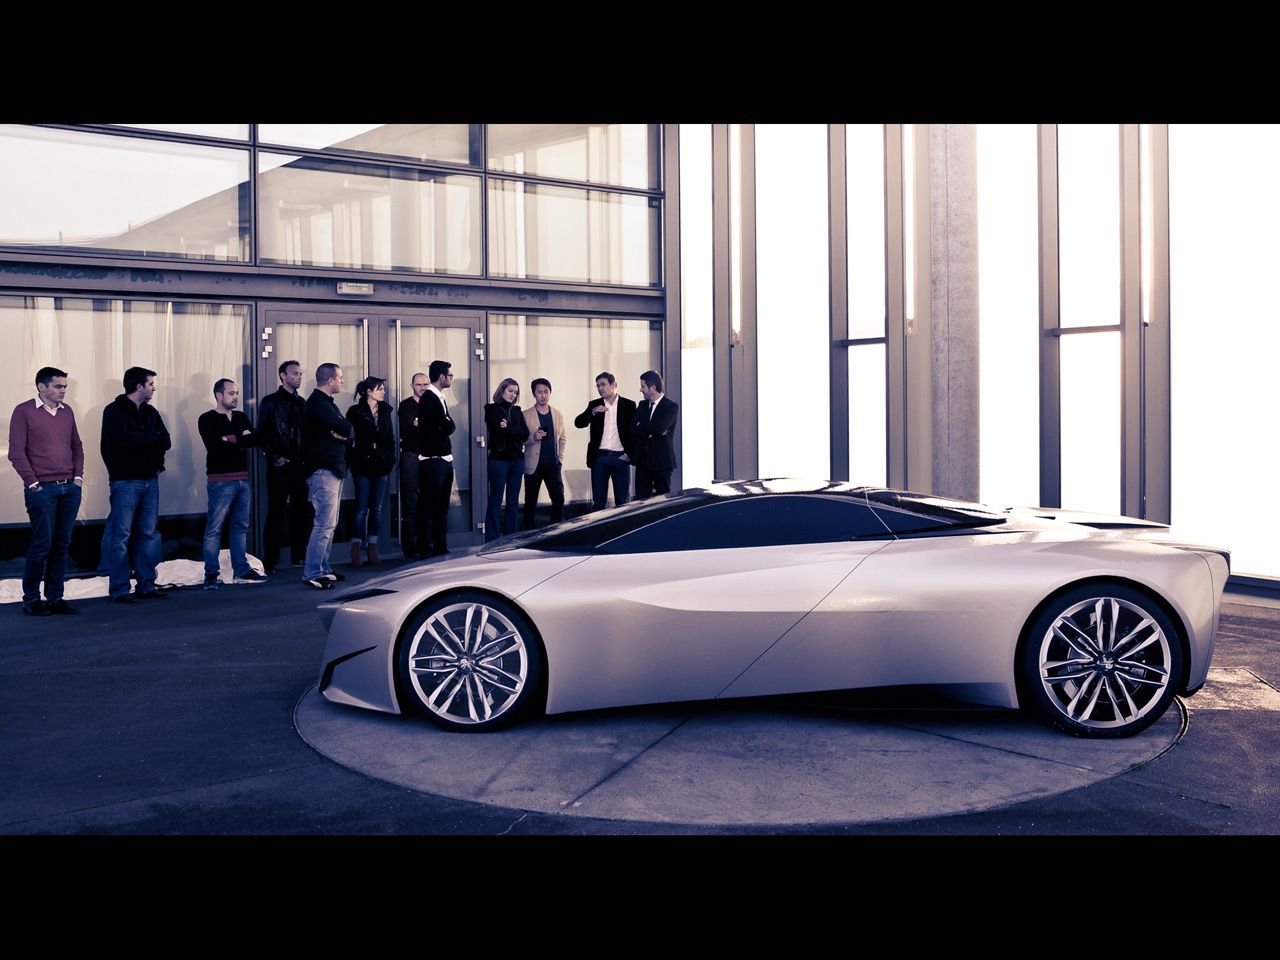 2012 Peugeot Onyx Concept